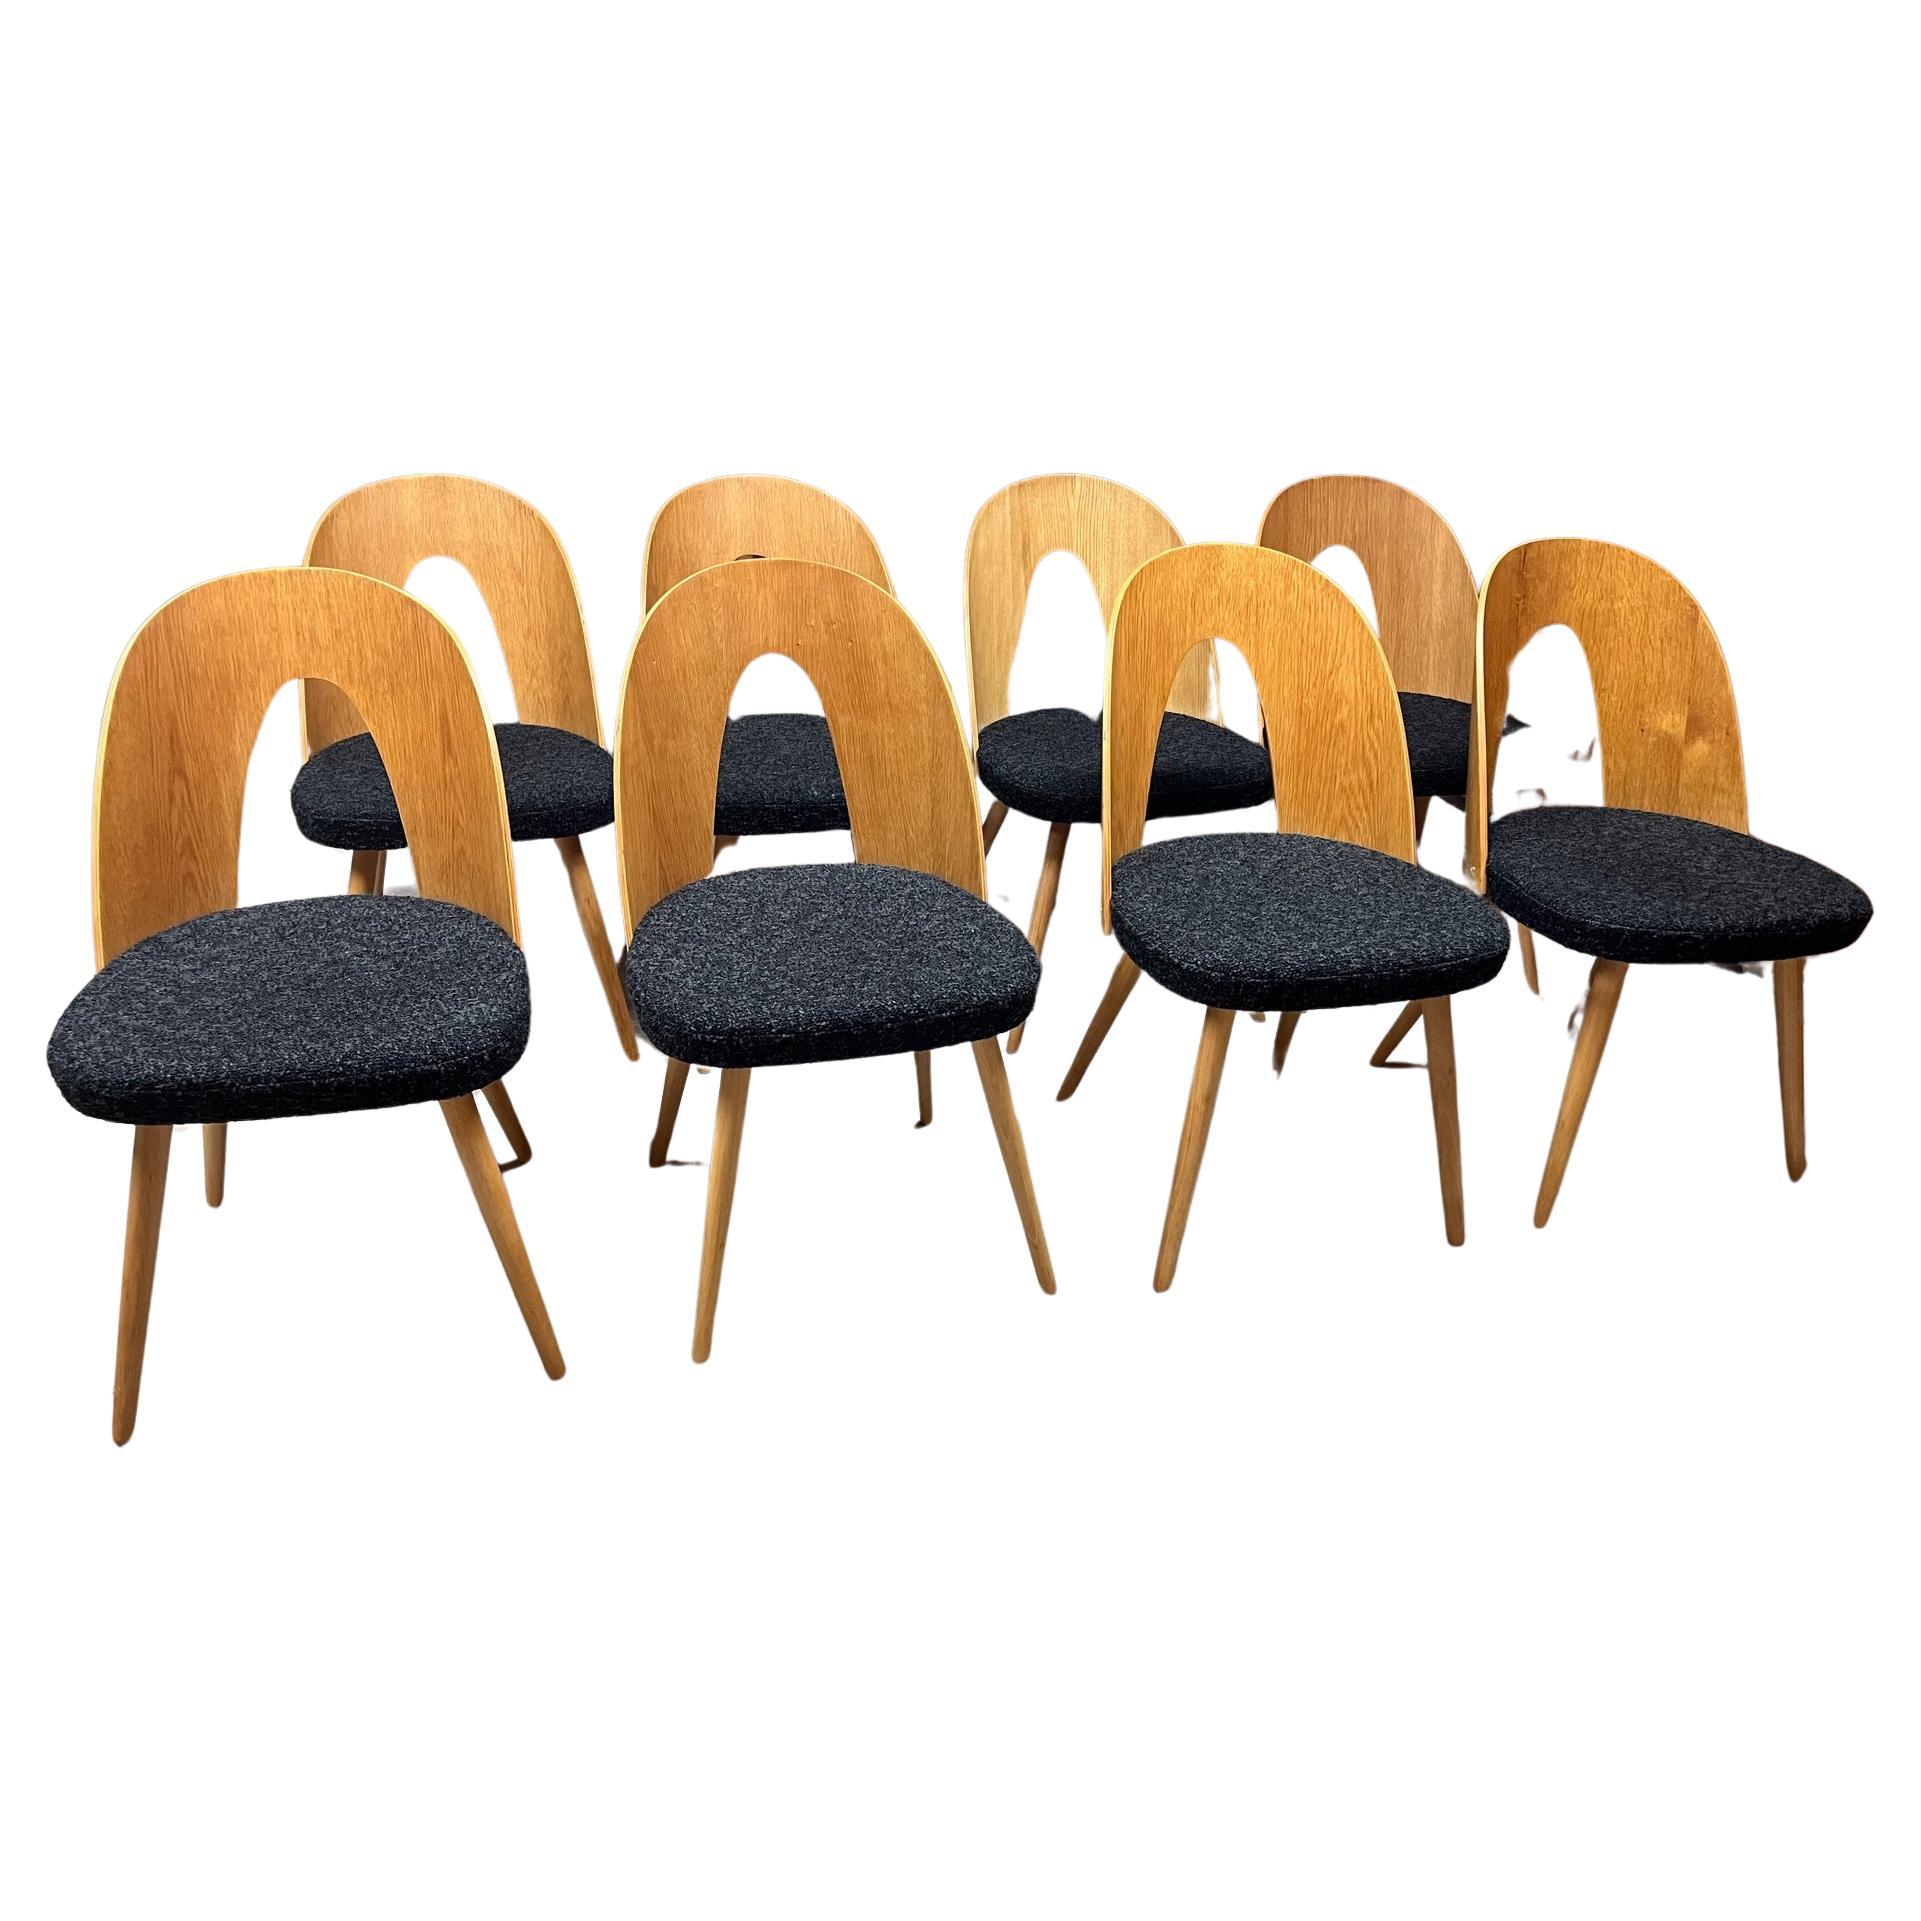 Tatra Pravenec Dining Room Chairs